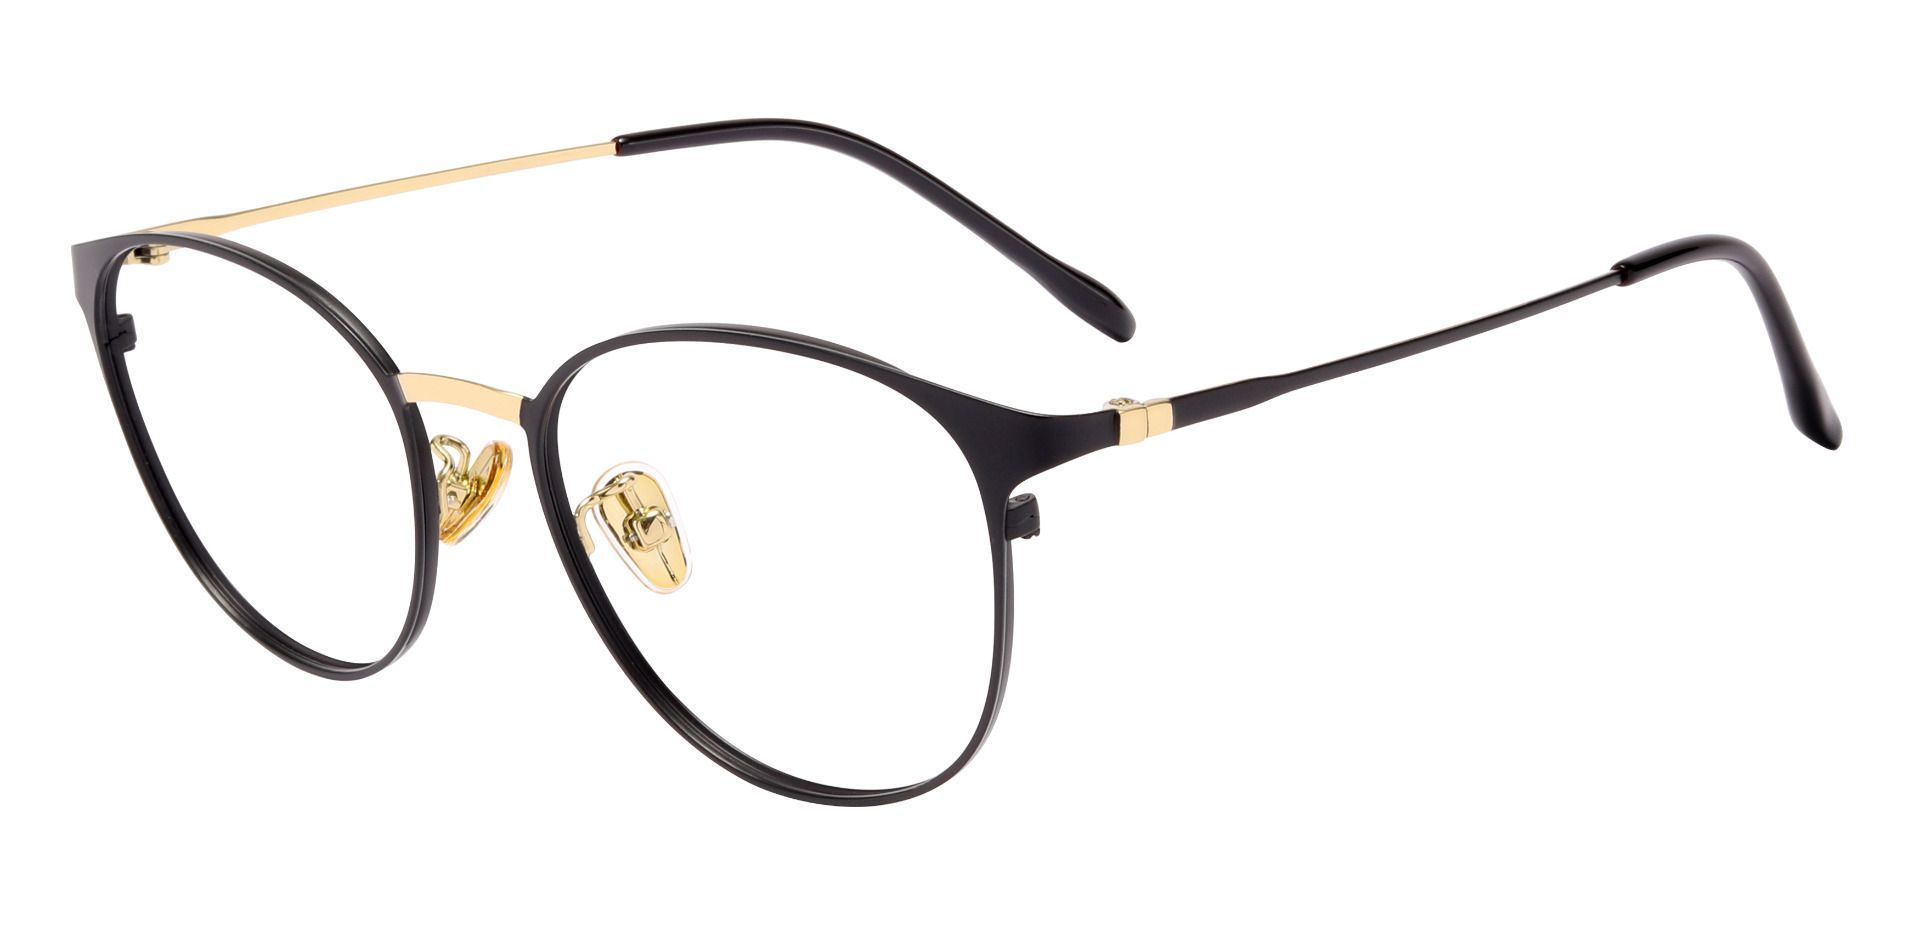 Bertie Oval Prescription Glasses - Black